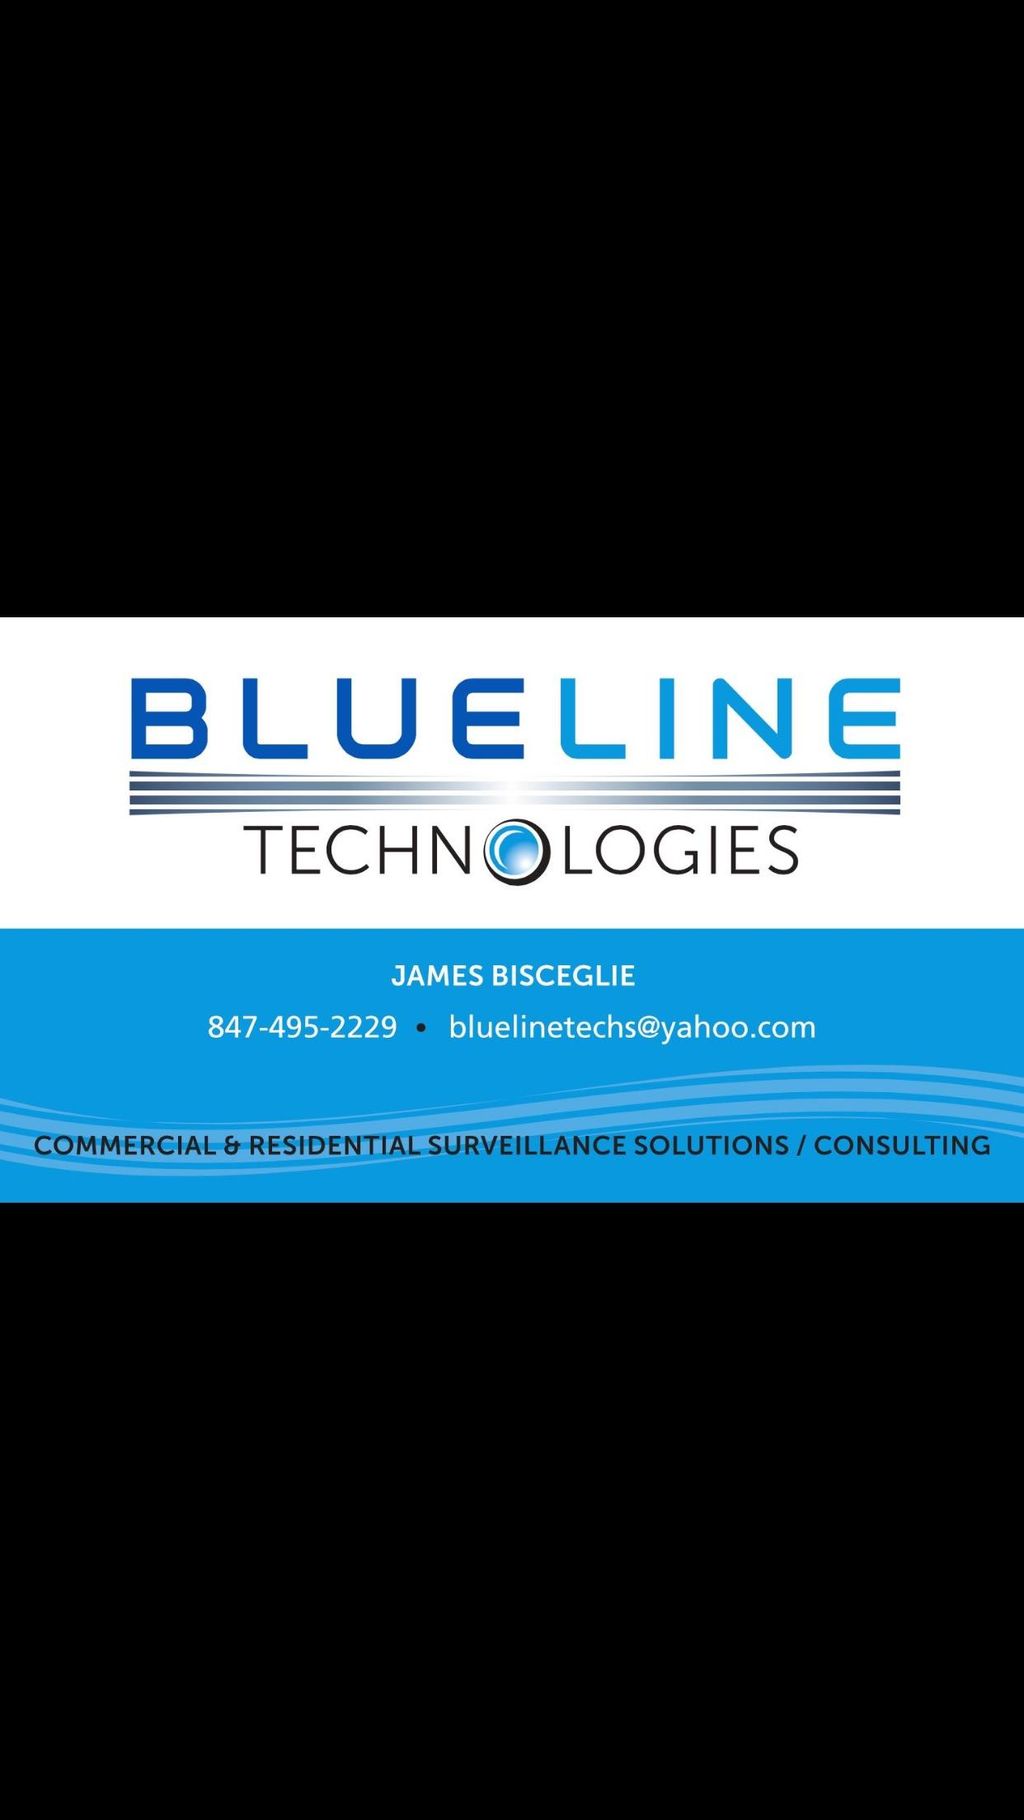 Blue Line Technologies